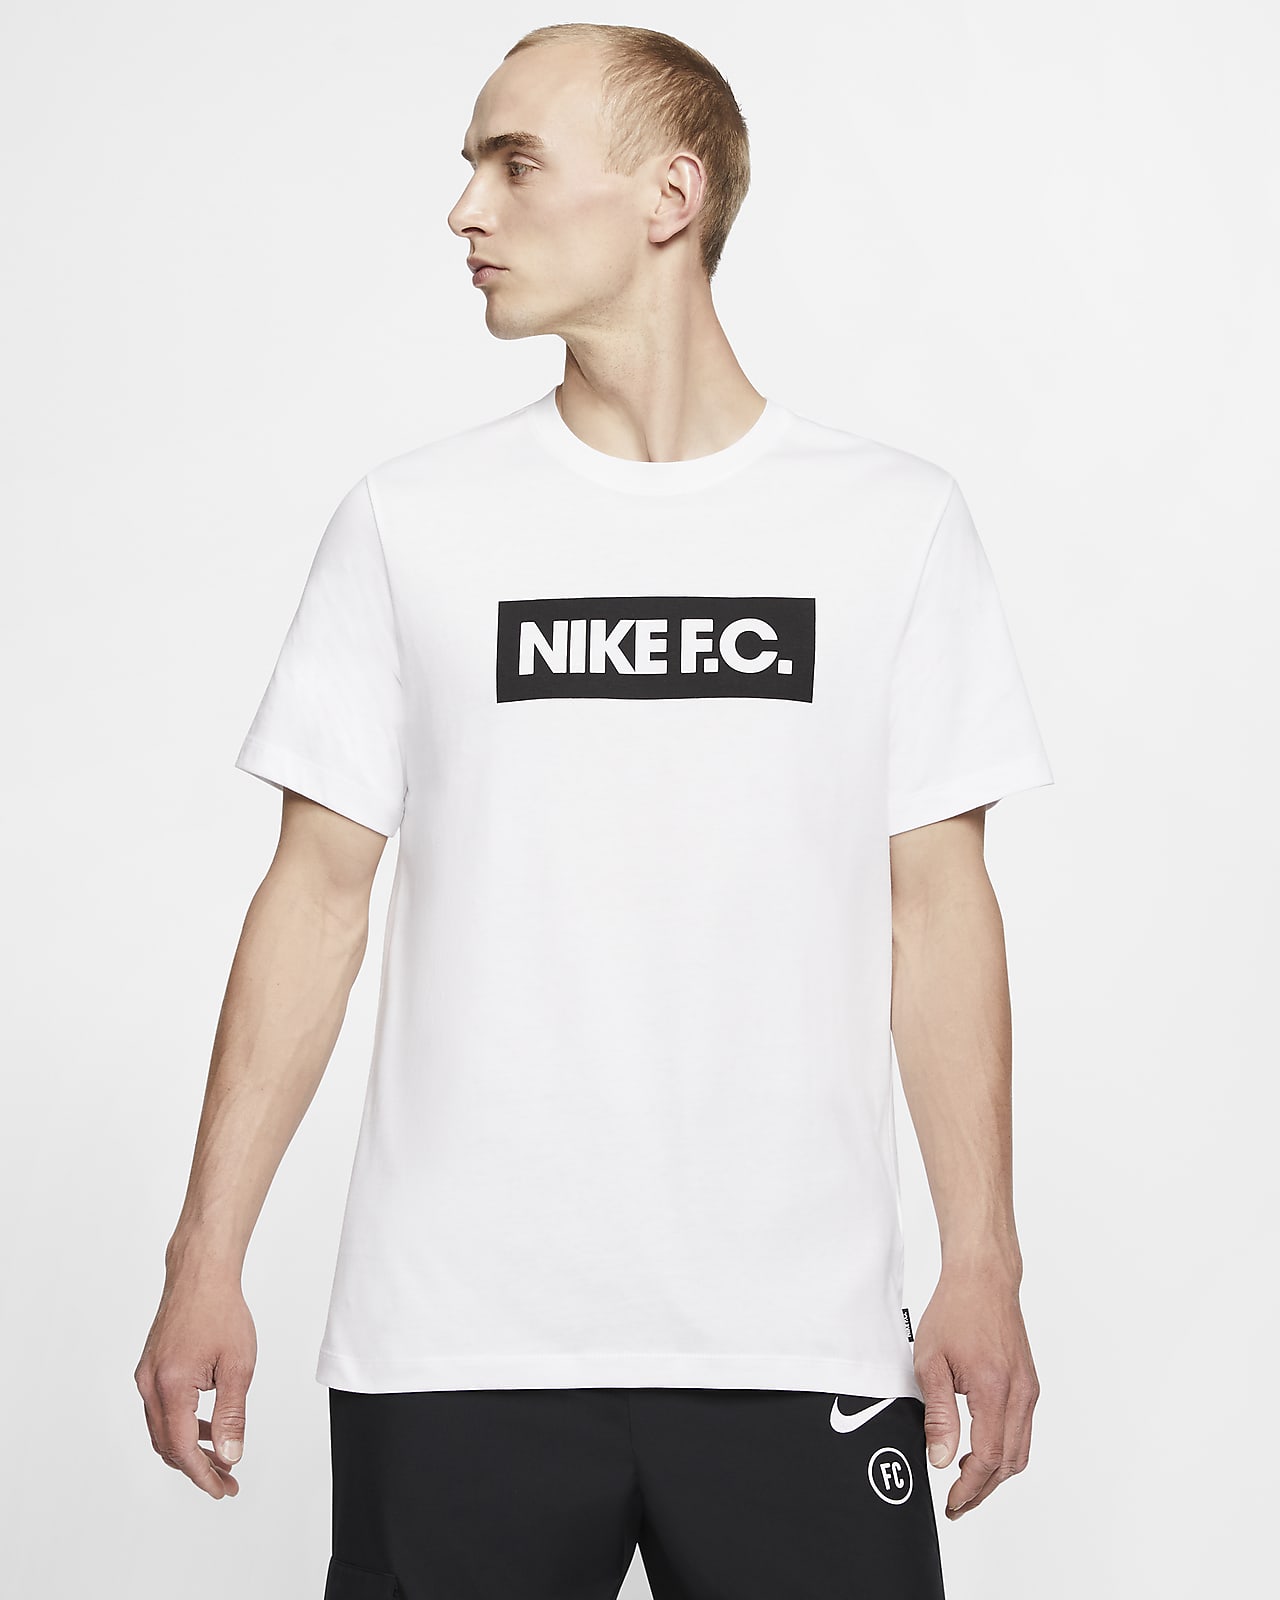 Nike F.C. SE11 férfi futballpóló